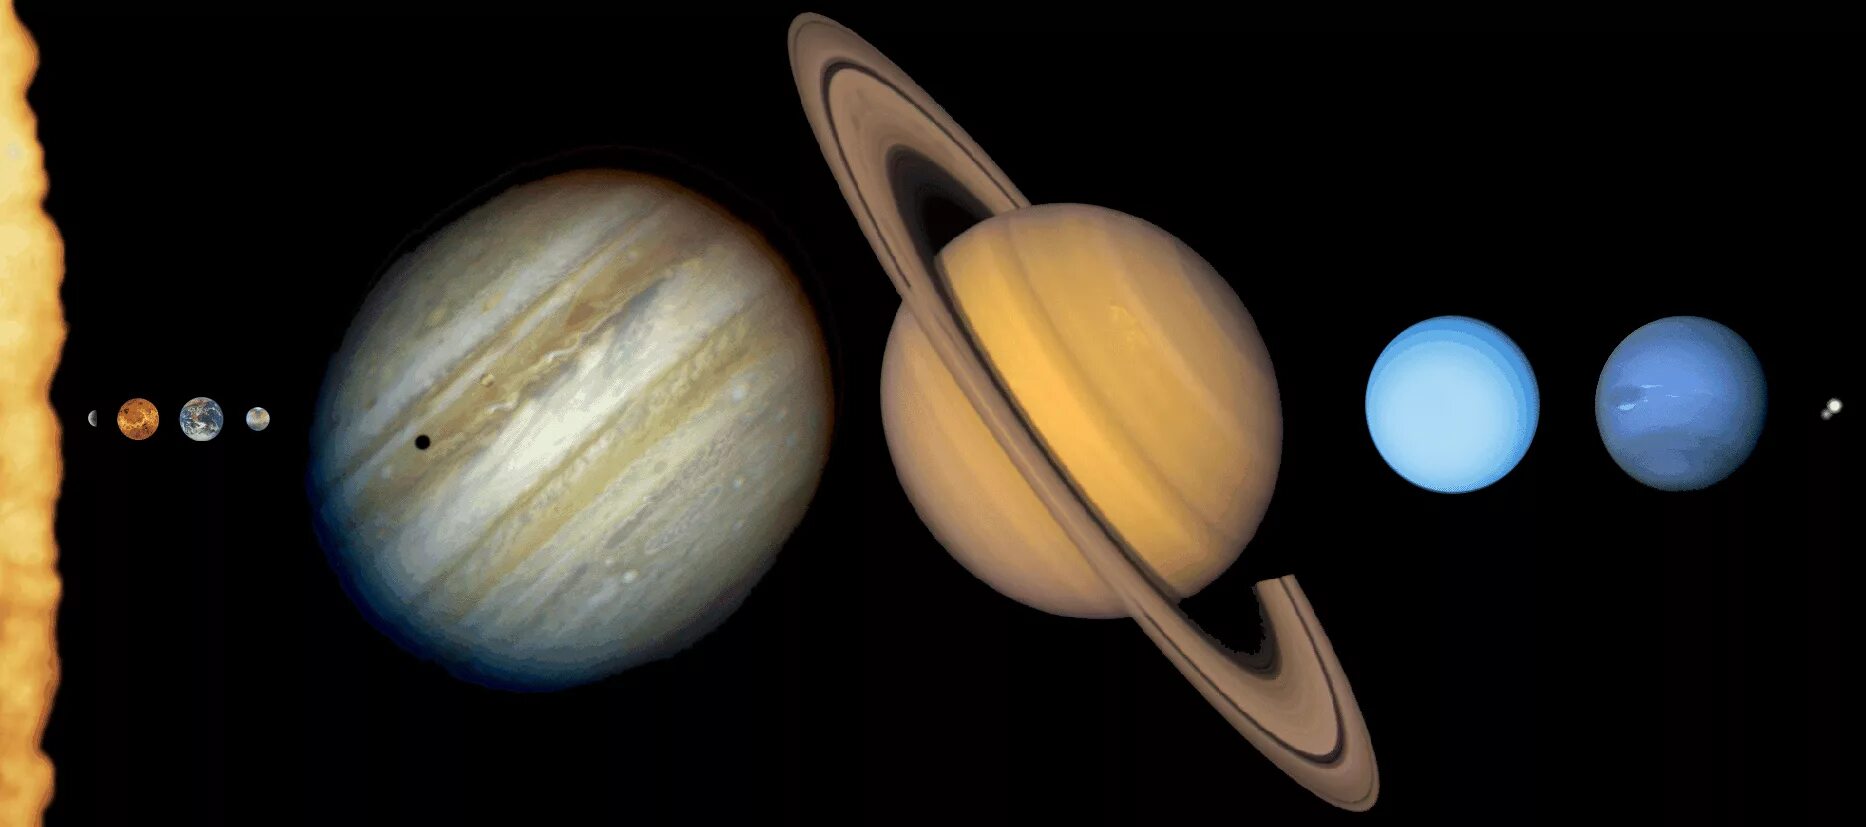 Снимки Сатурна Вояджер. Планеты гиганты Юпитер Уран. Земля Нептун Уран Сатурн Юпитер. Марс Юпитер Сатурн Уран Нептун. Юпитер больше нептуна